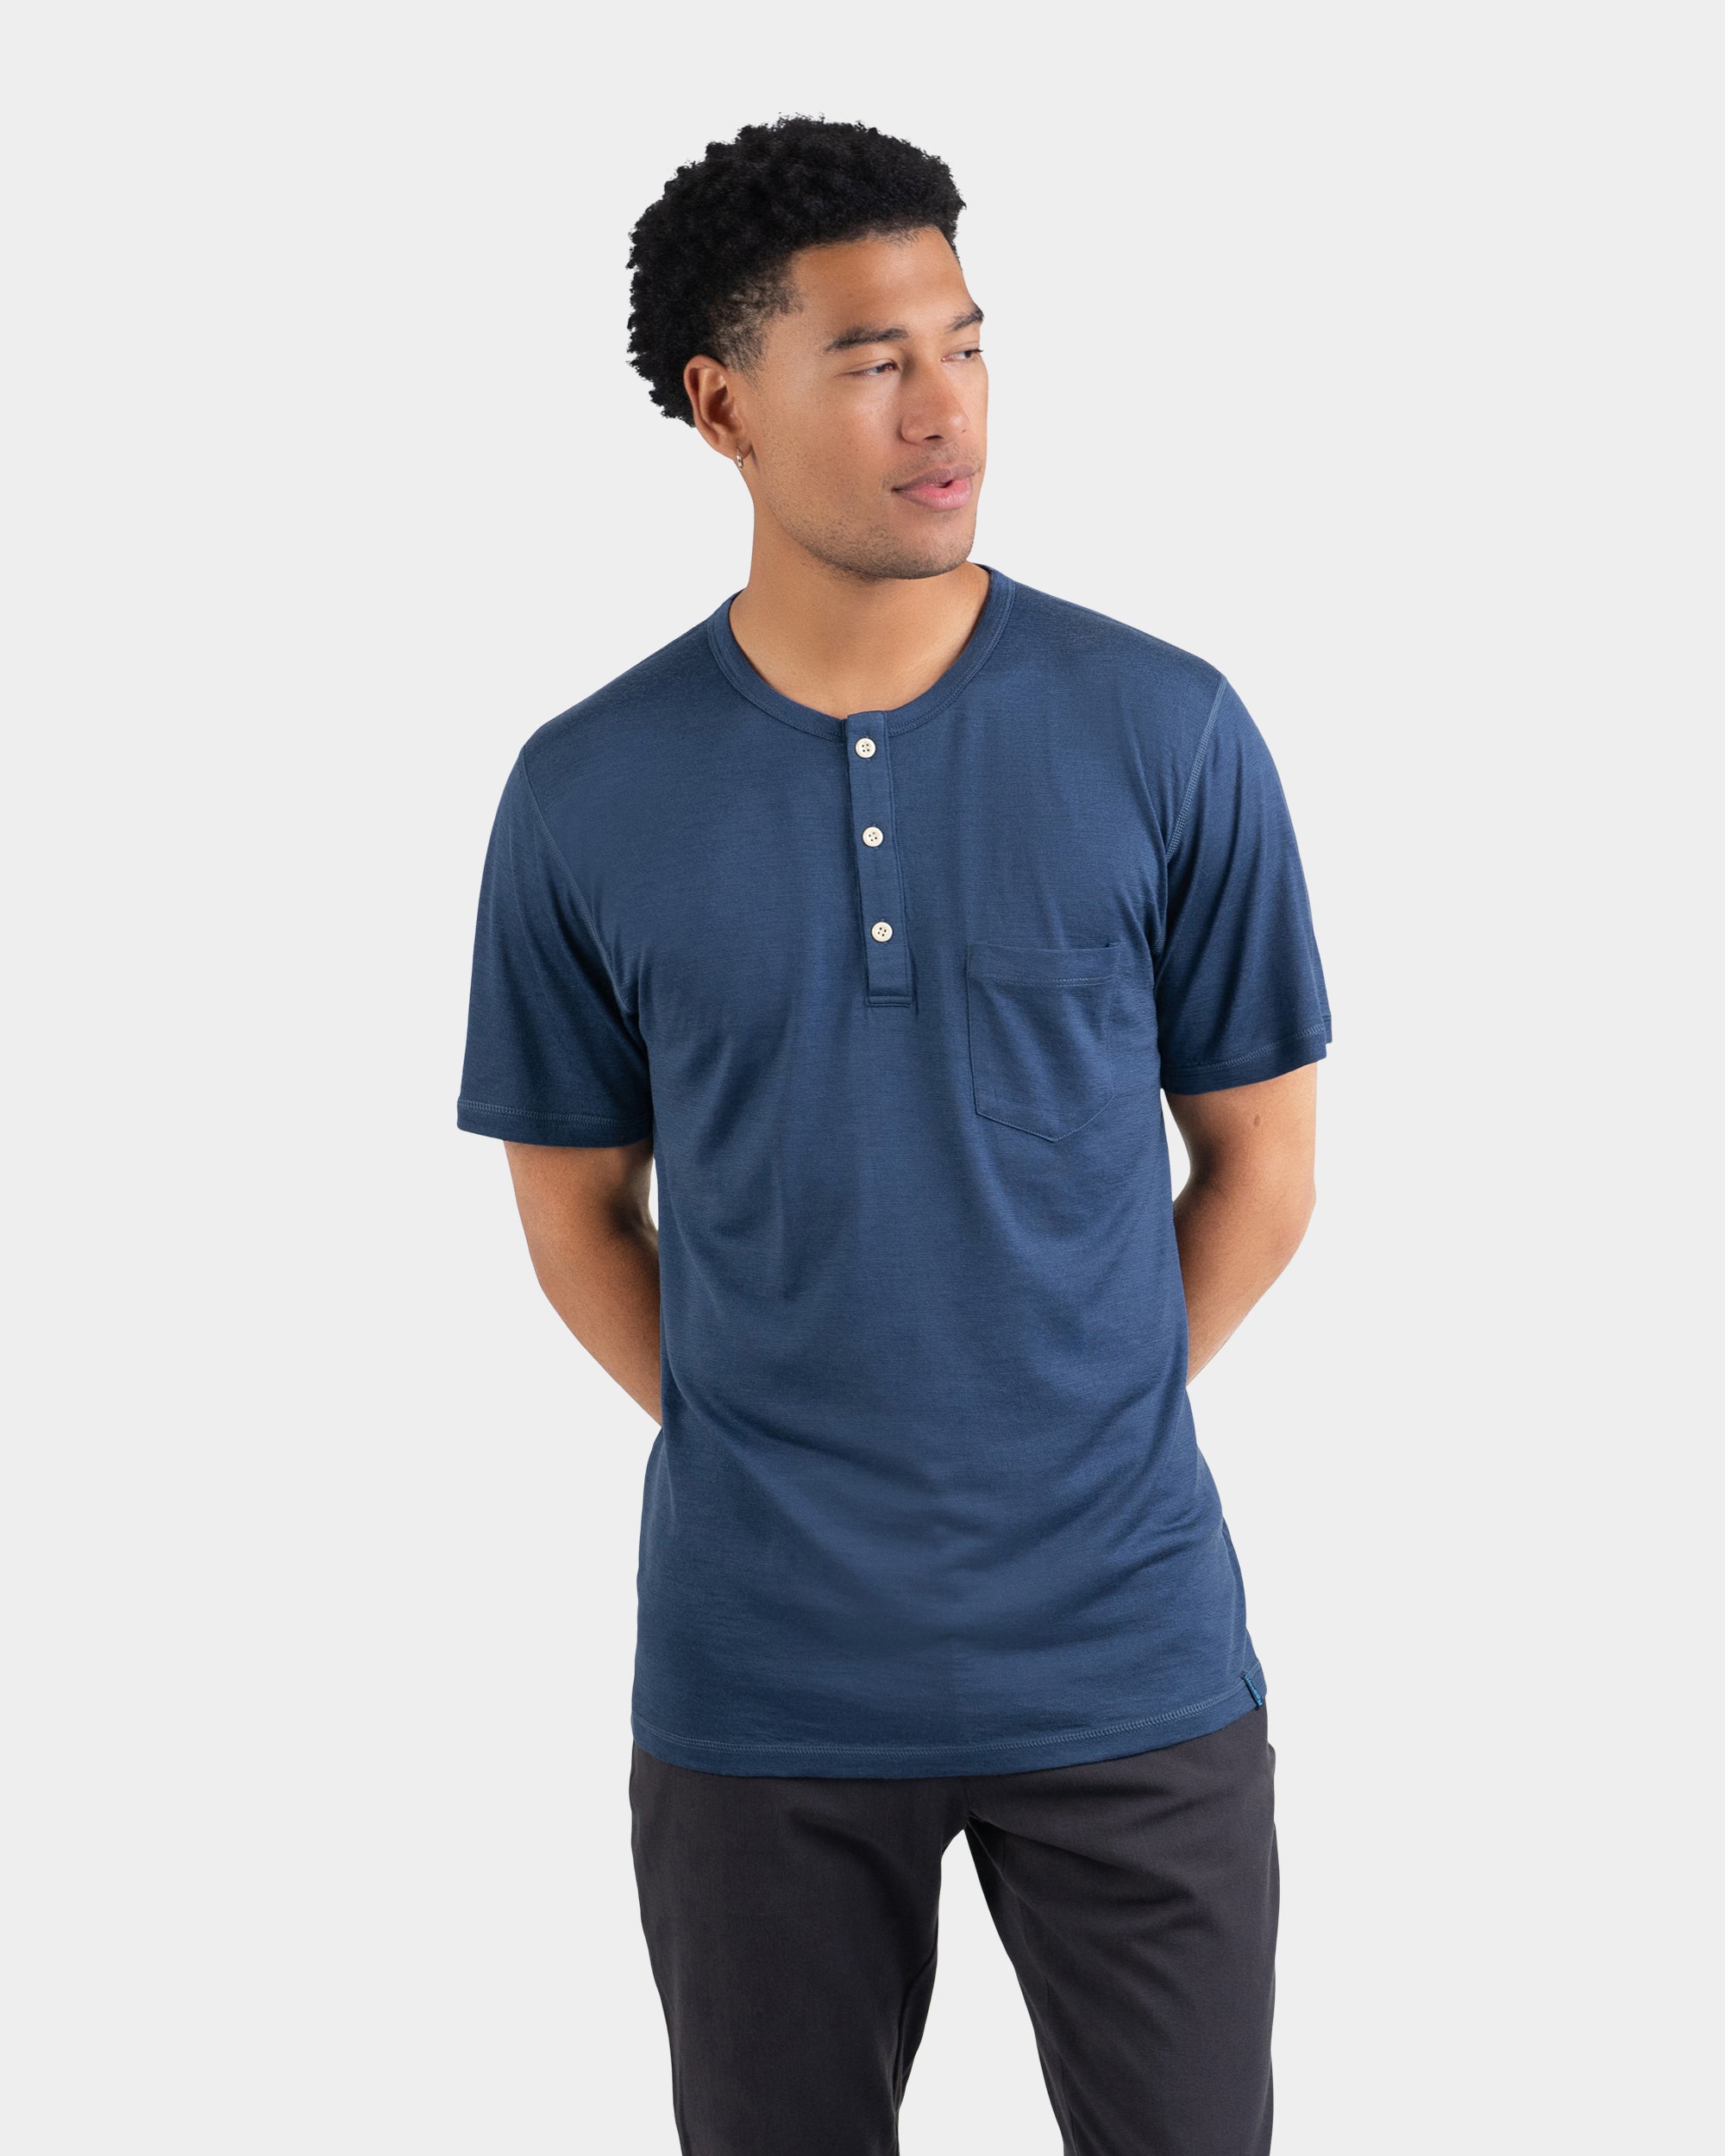 Mens Short Sleeve Henley Shirts Cheap Sale | bellvalefarms.com